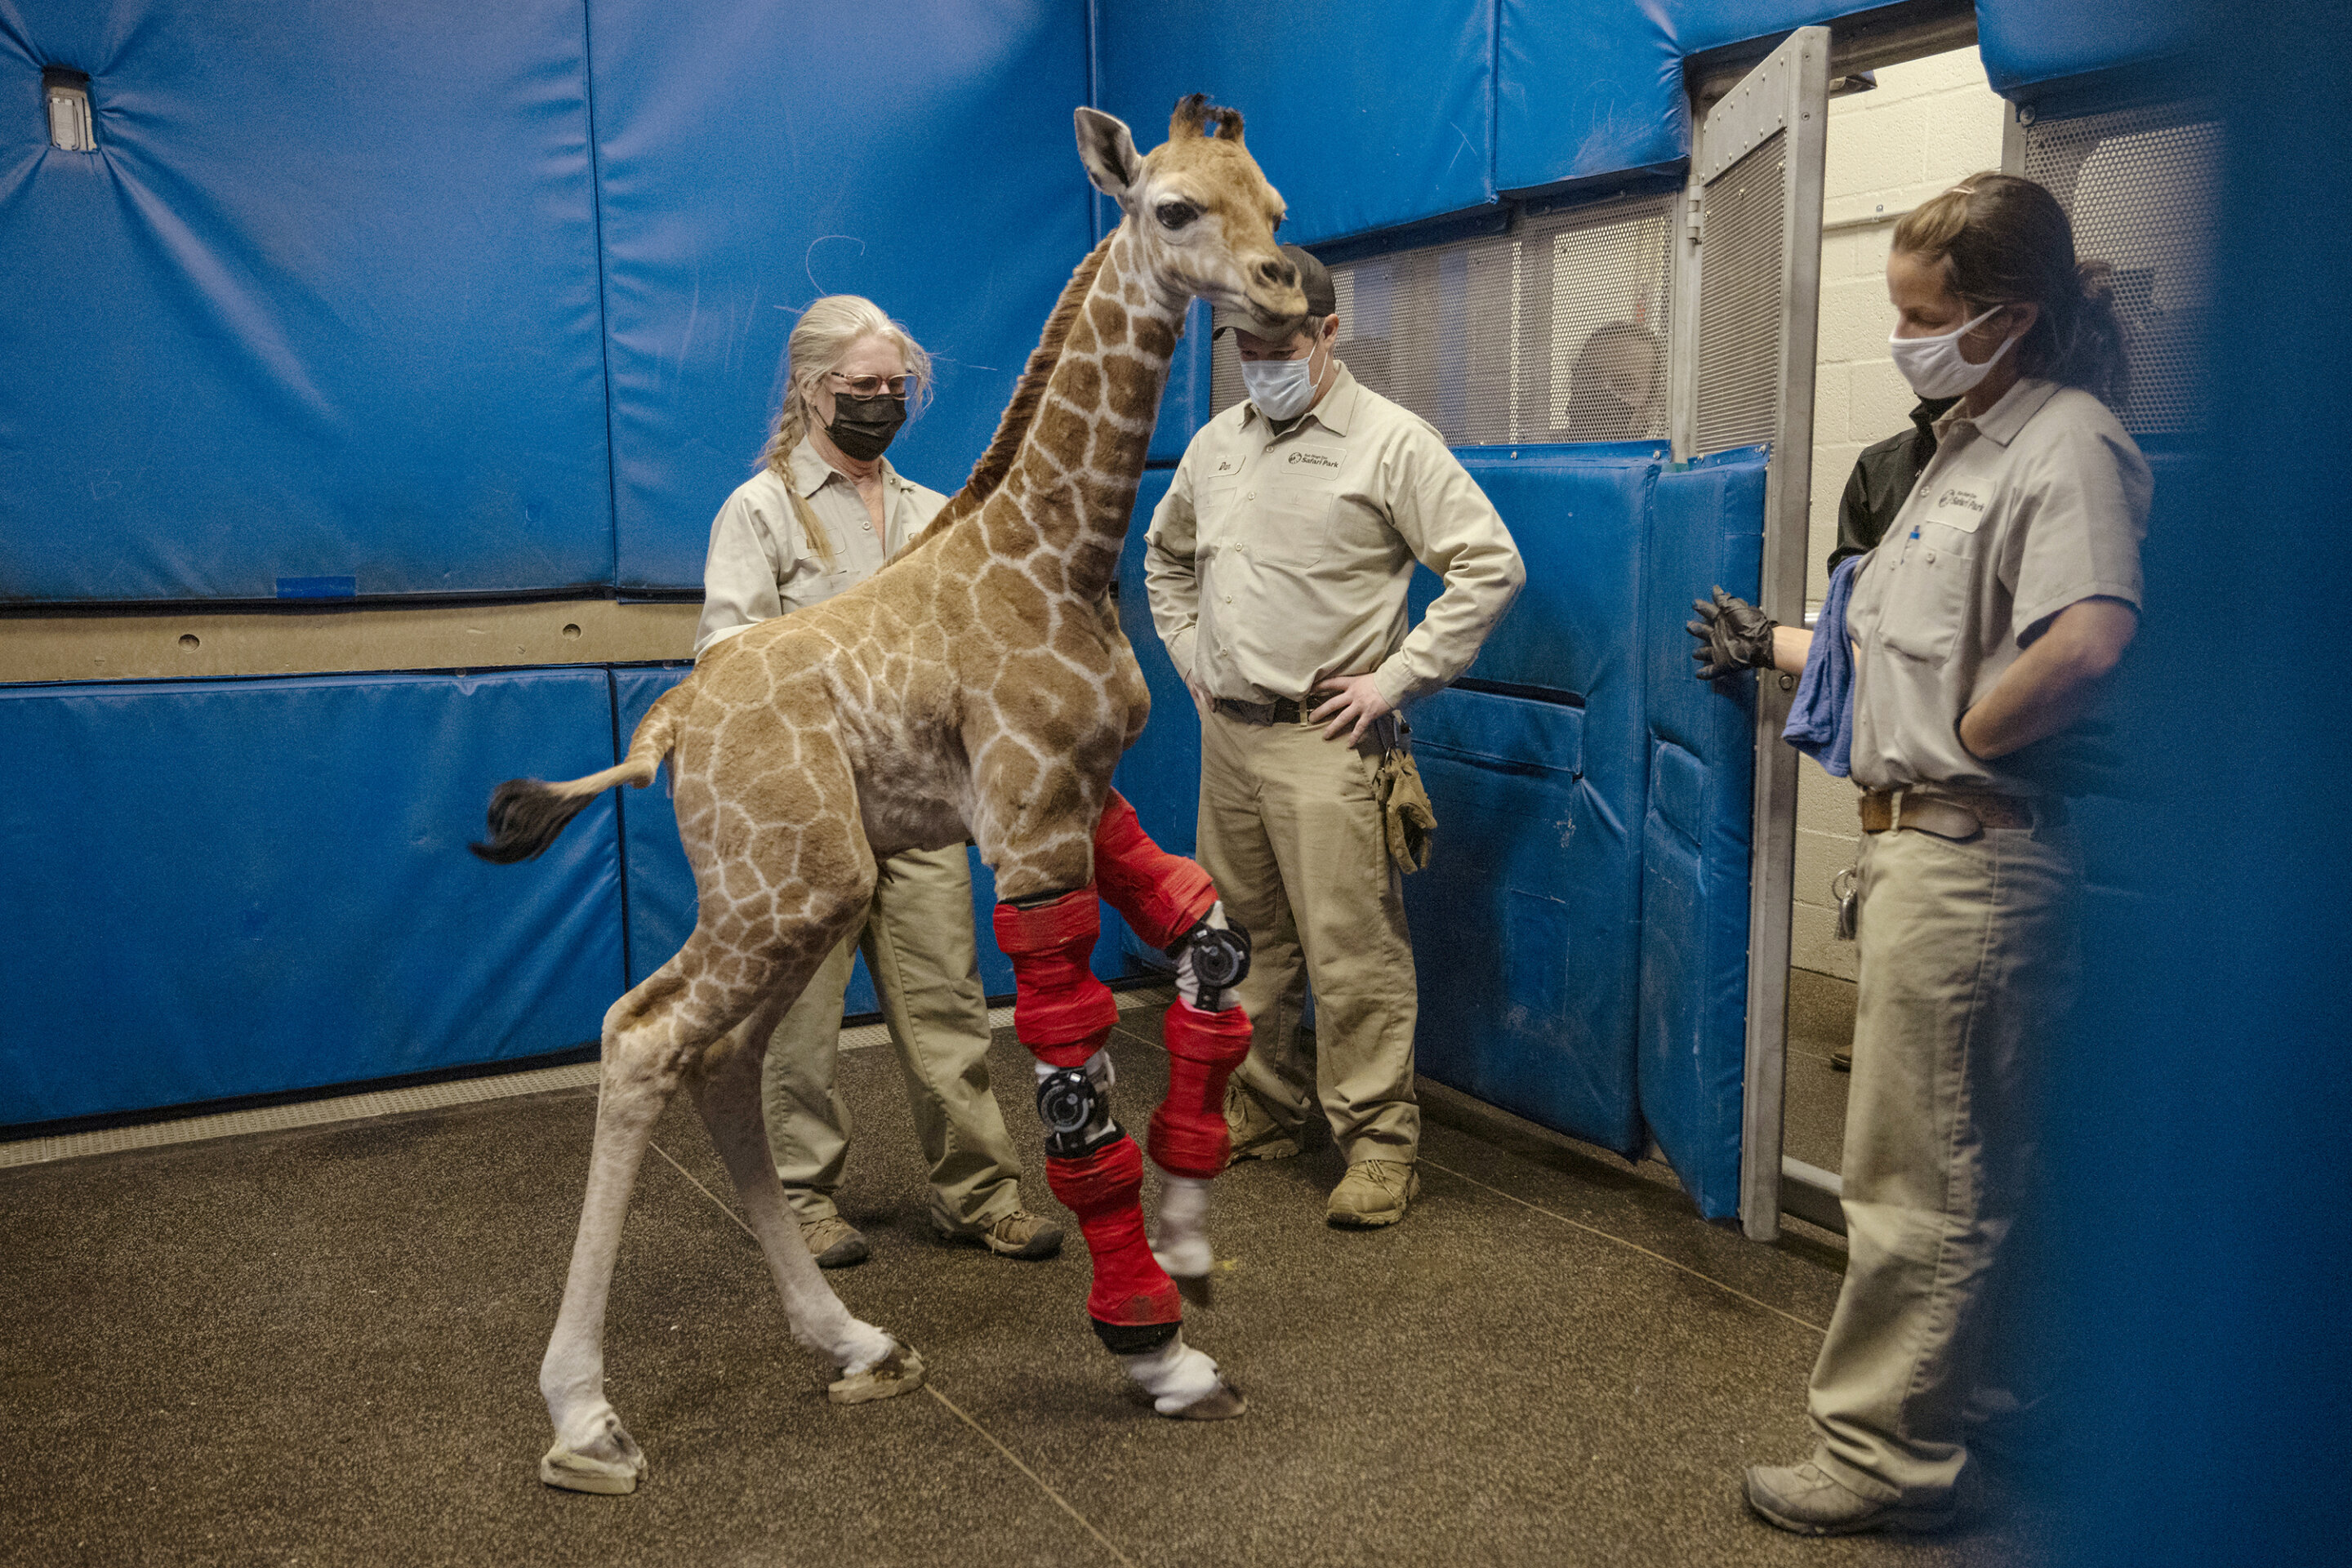 #Bracing for her future: Human medicine rescues giraffe